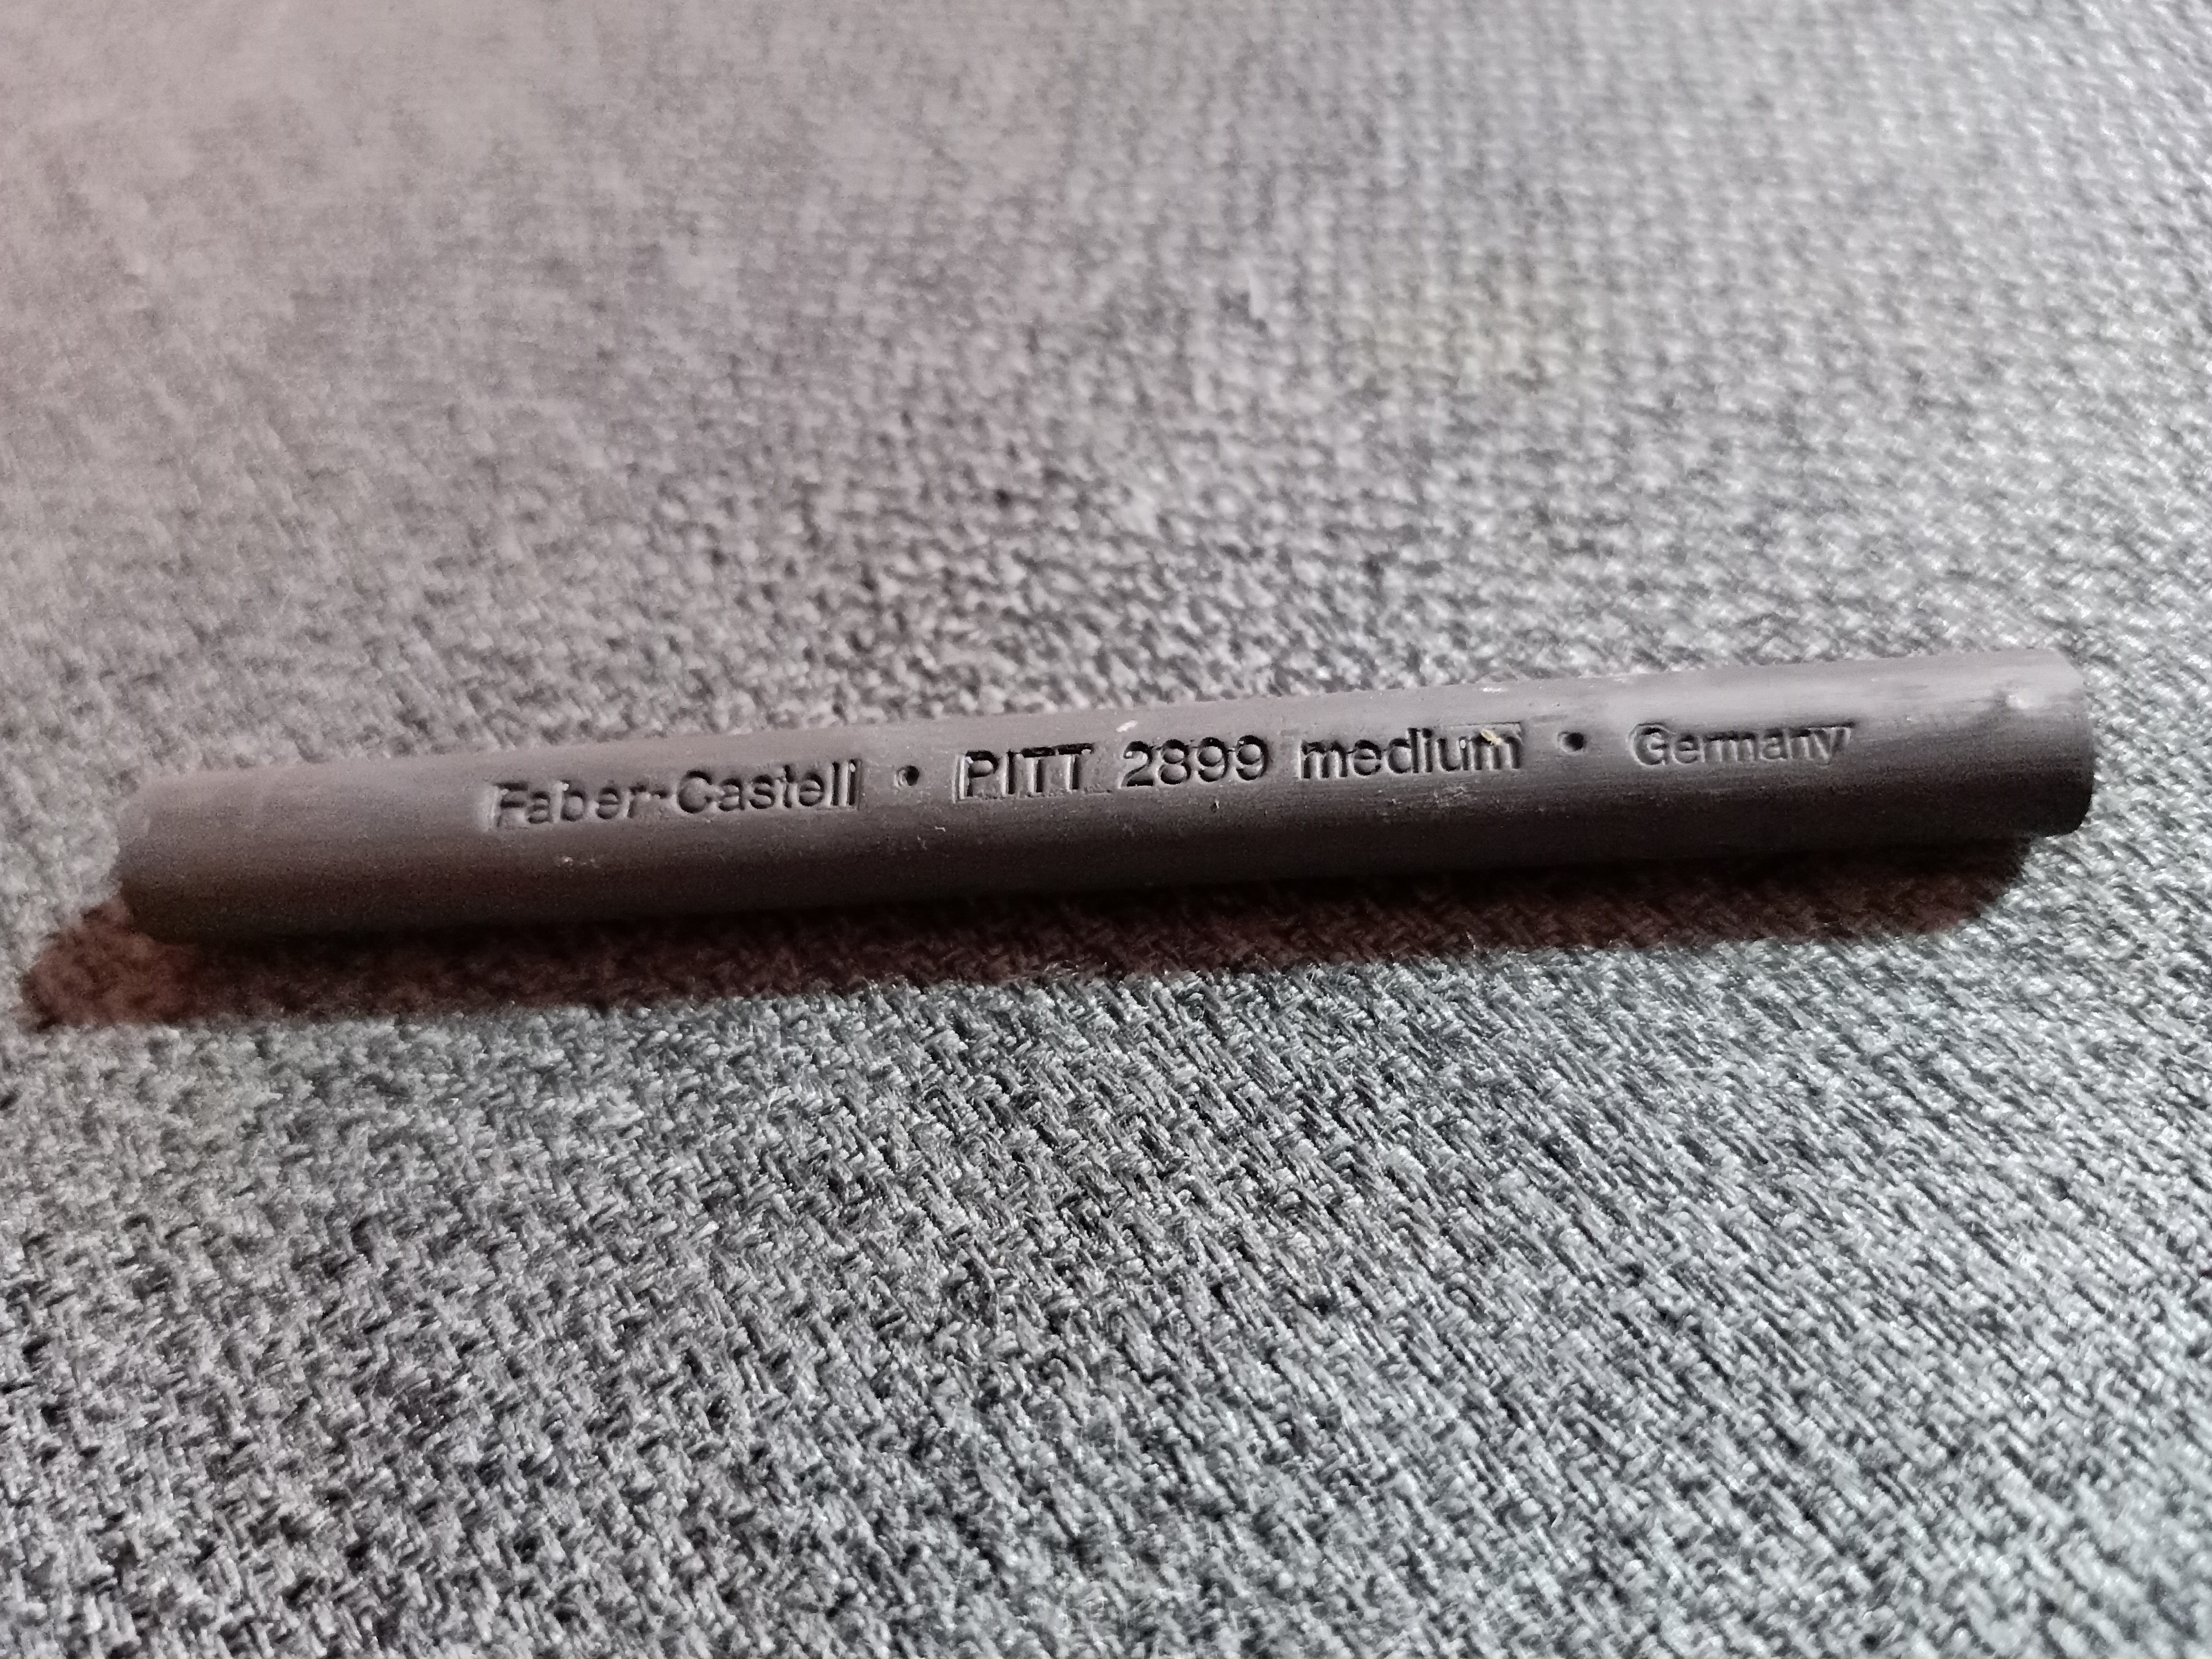 Faber-Castell Pitt Compressed Charcoal Sticks